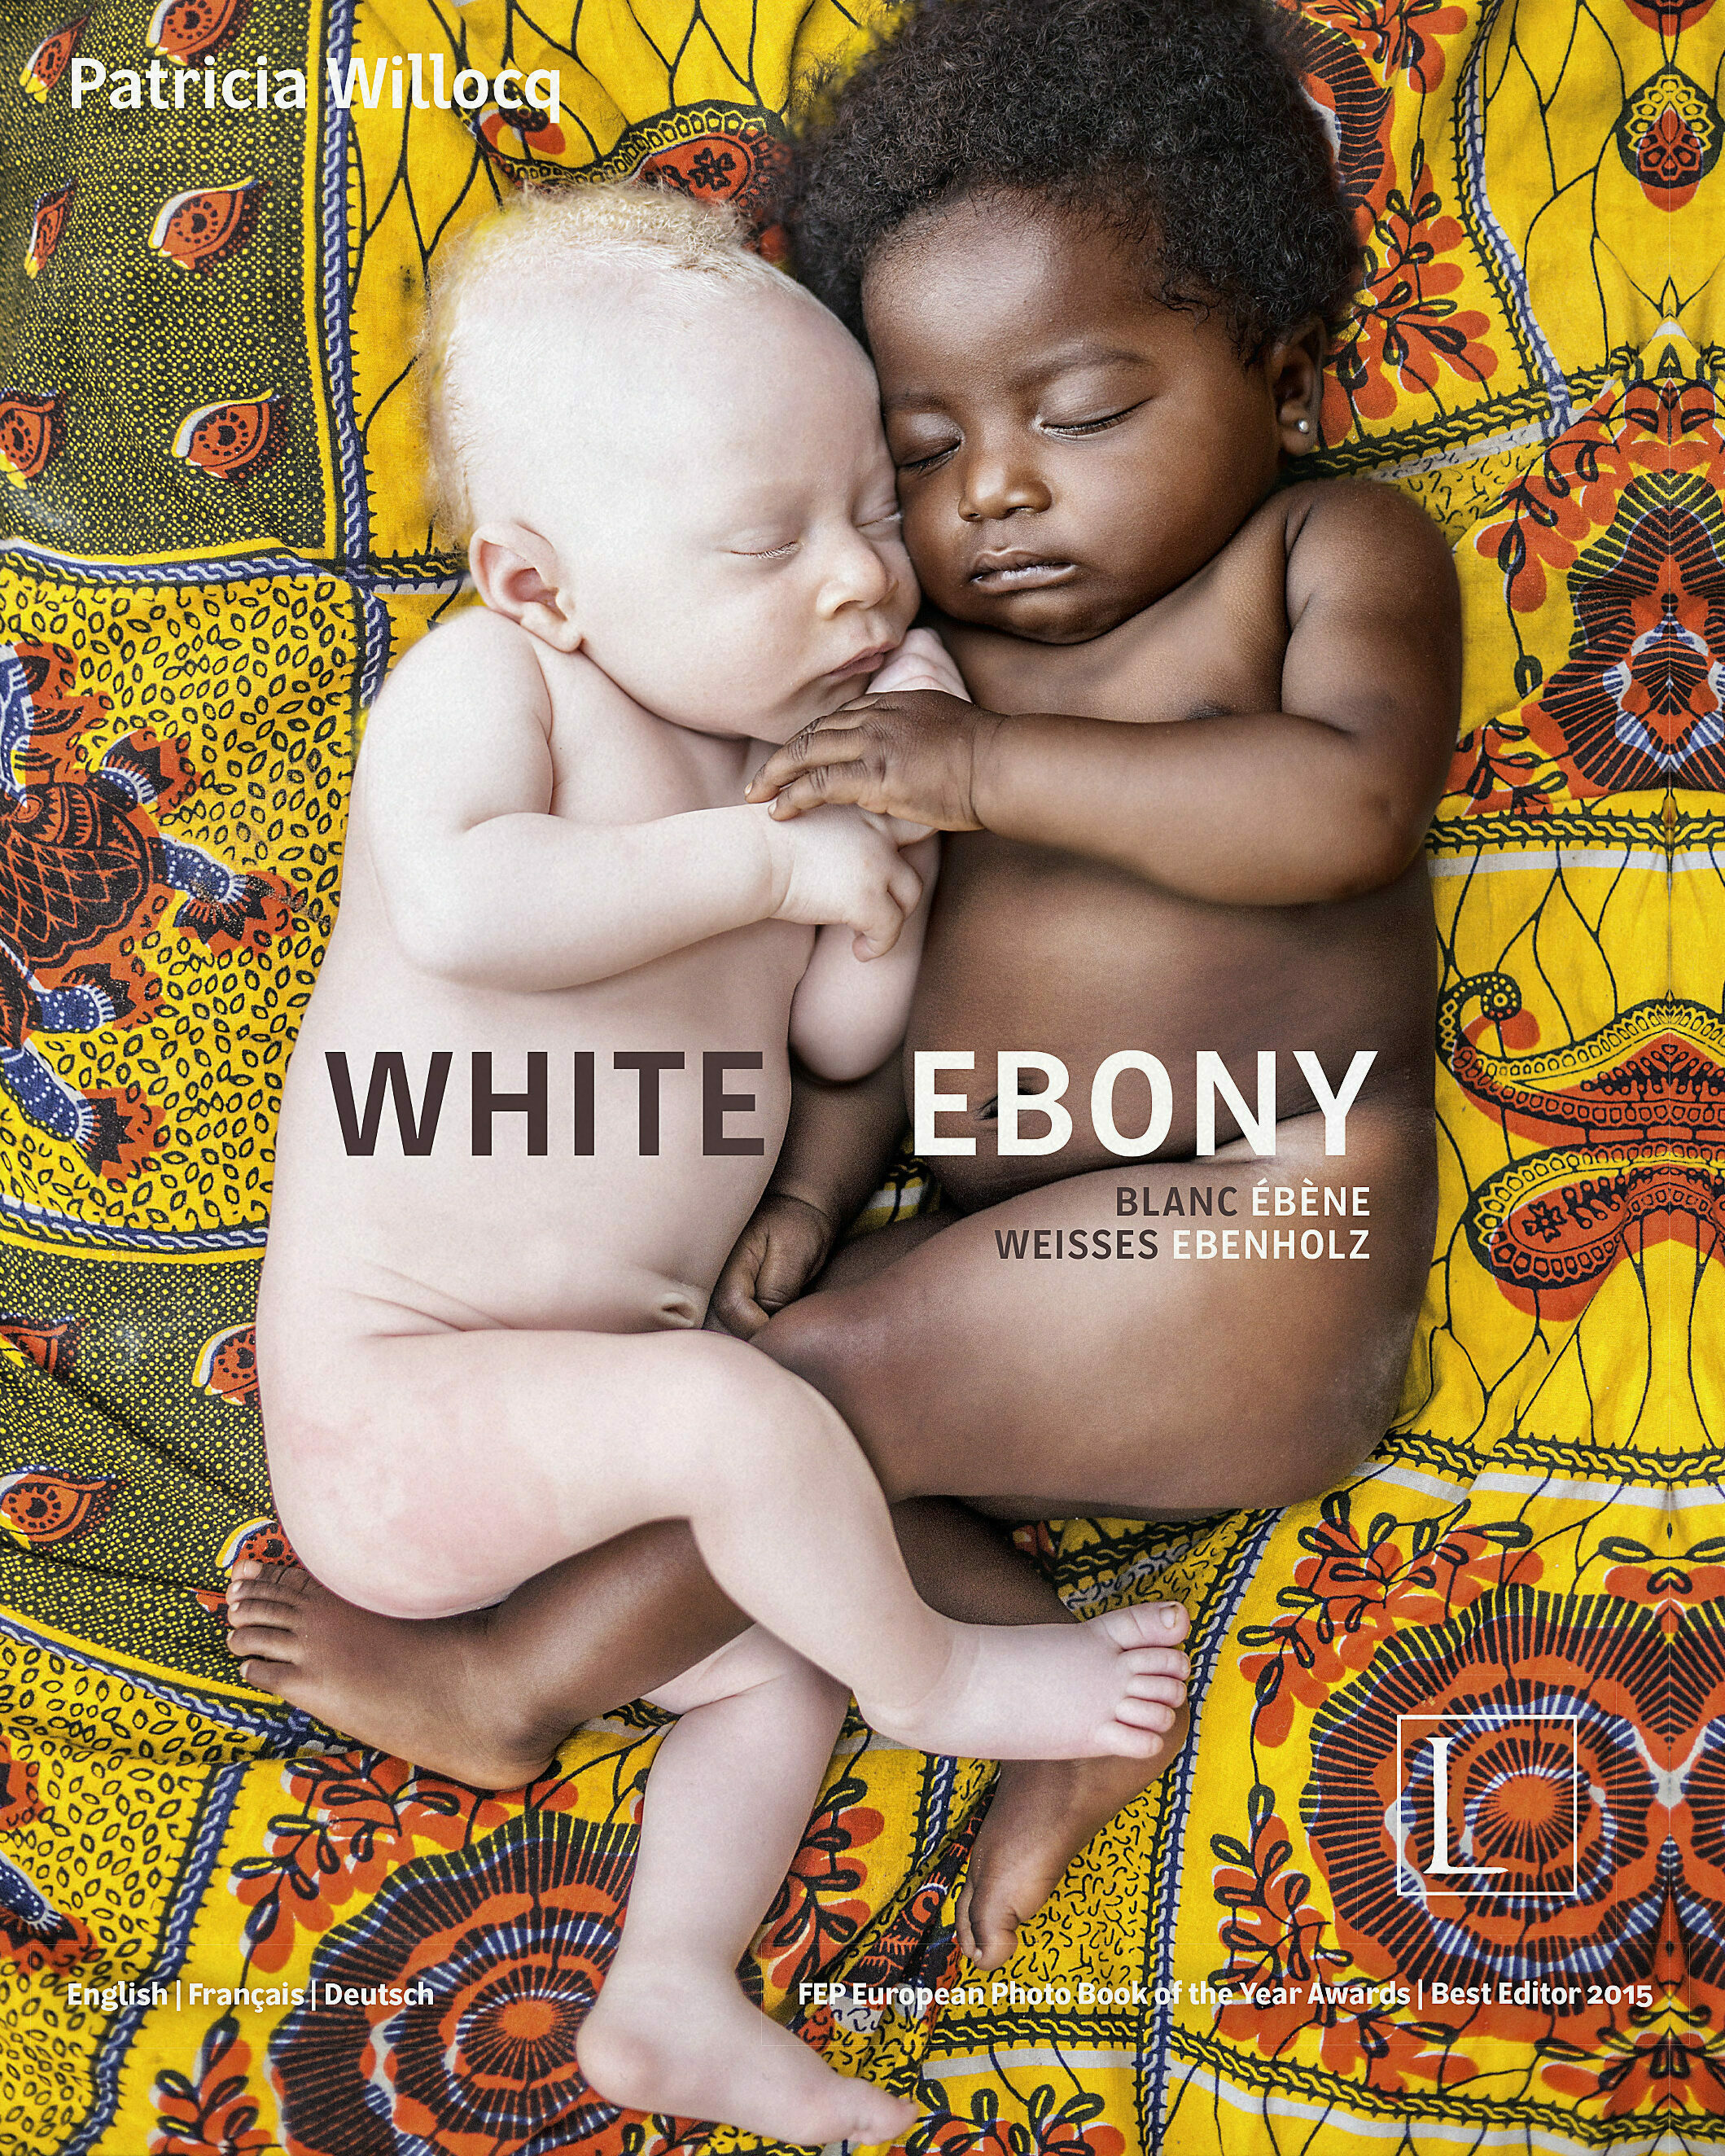 white ebony, patricia willocq, kunstbuch bildband fotobuch